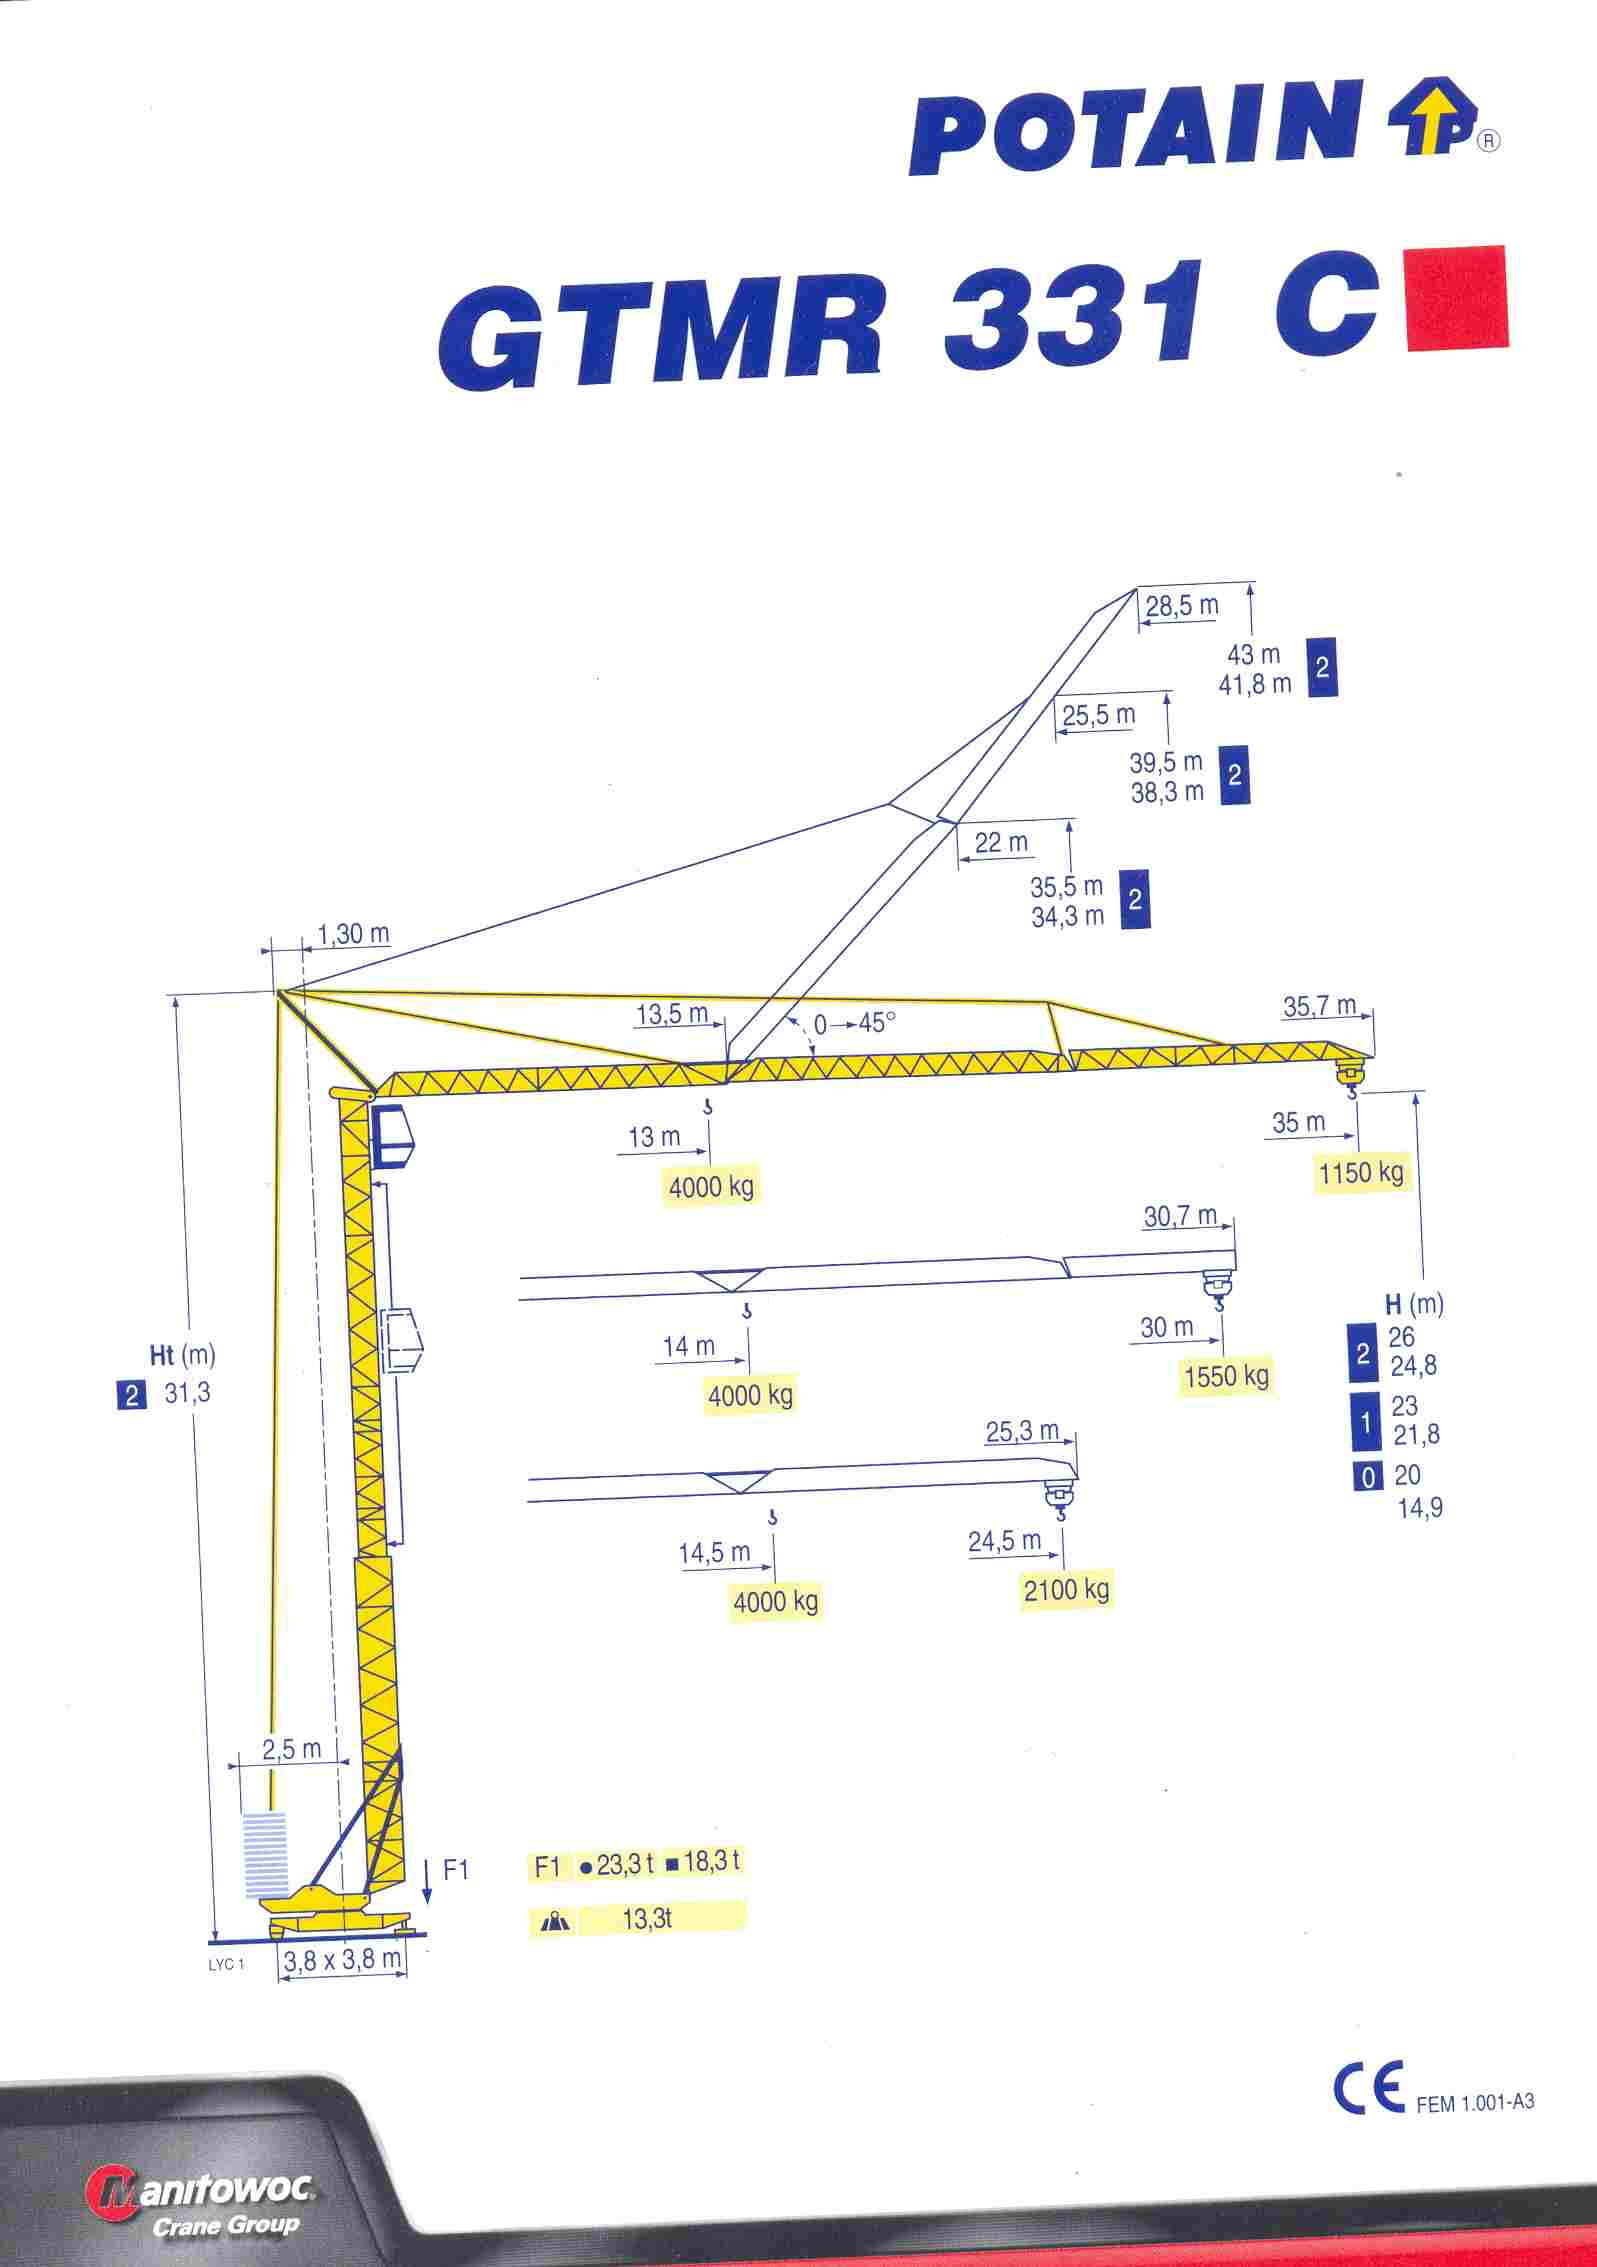 GTMR 331 C